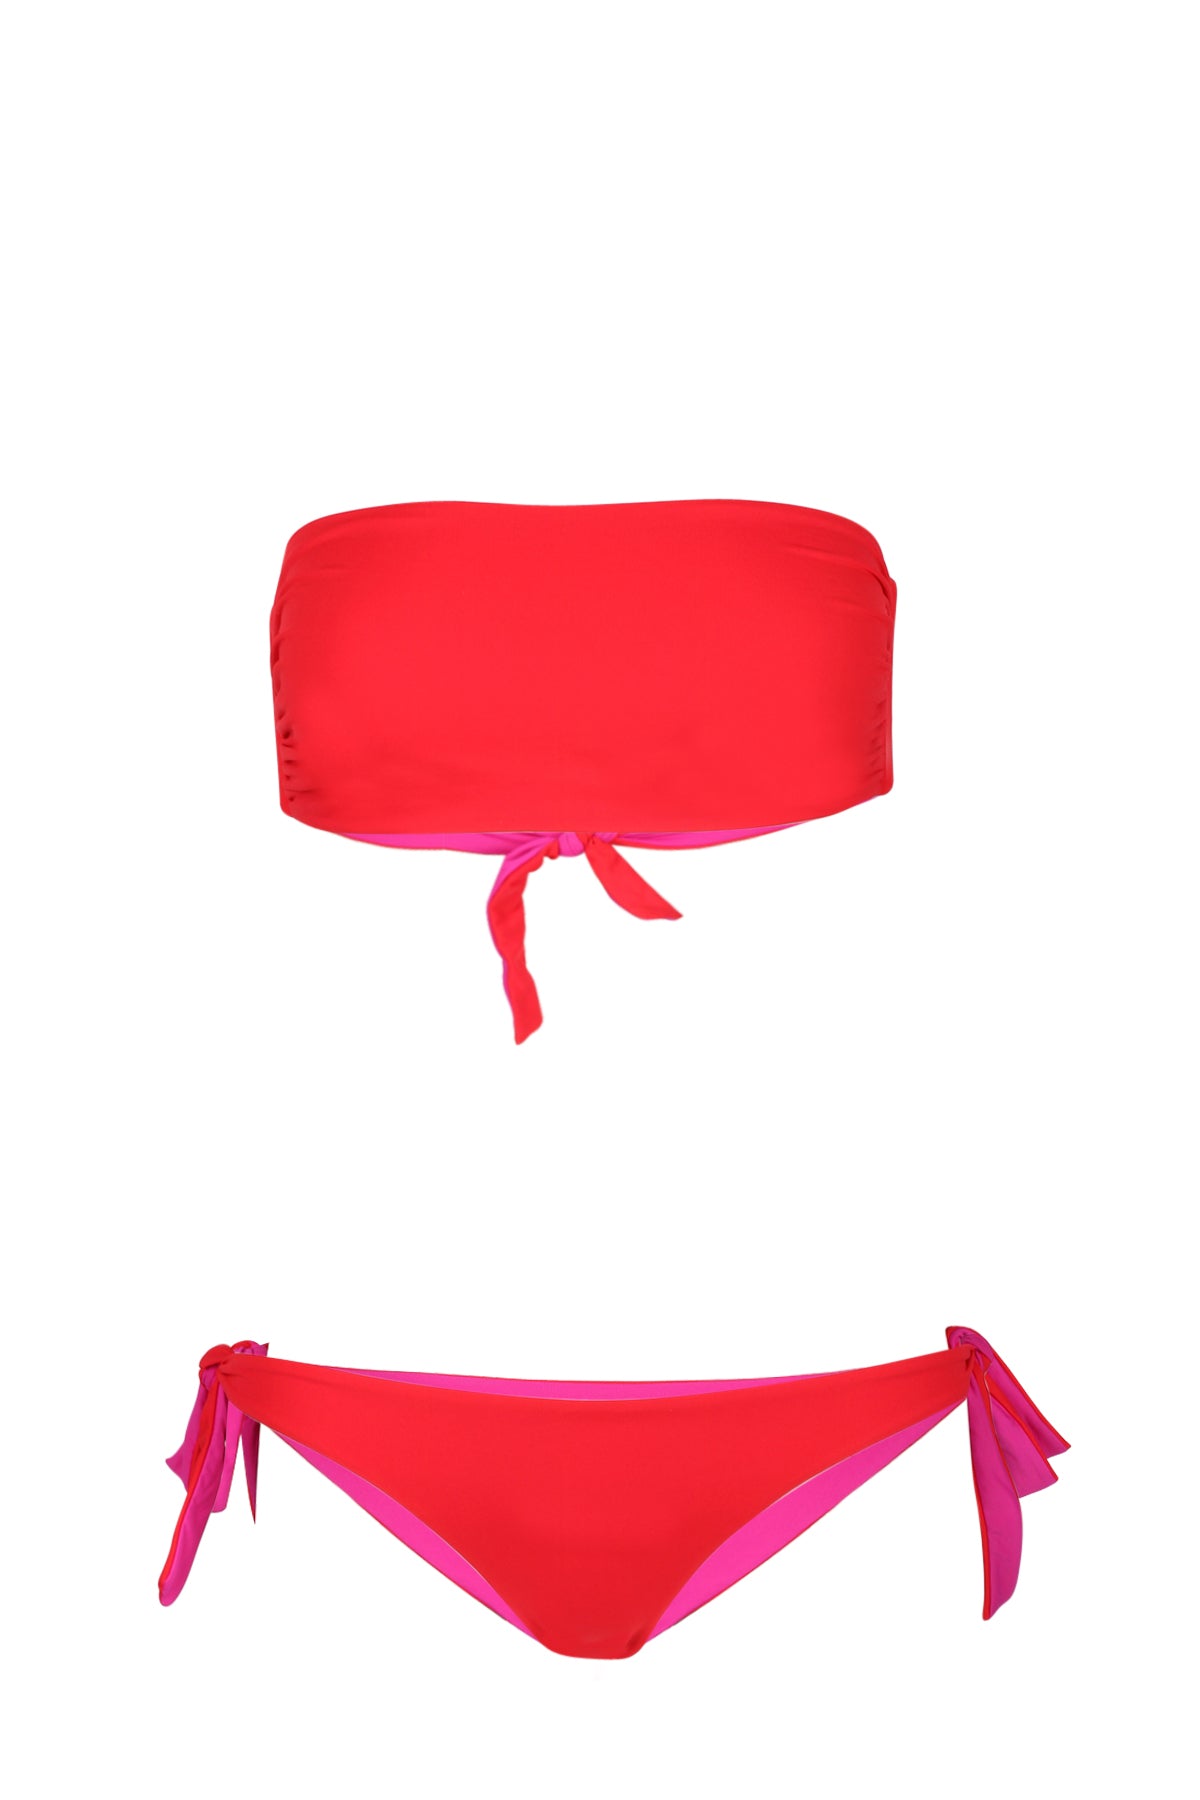 FISICO Costume Bikini a Fascia Double Face Rosso e Fucsia Rosso/fuxia